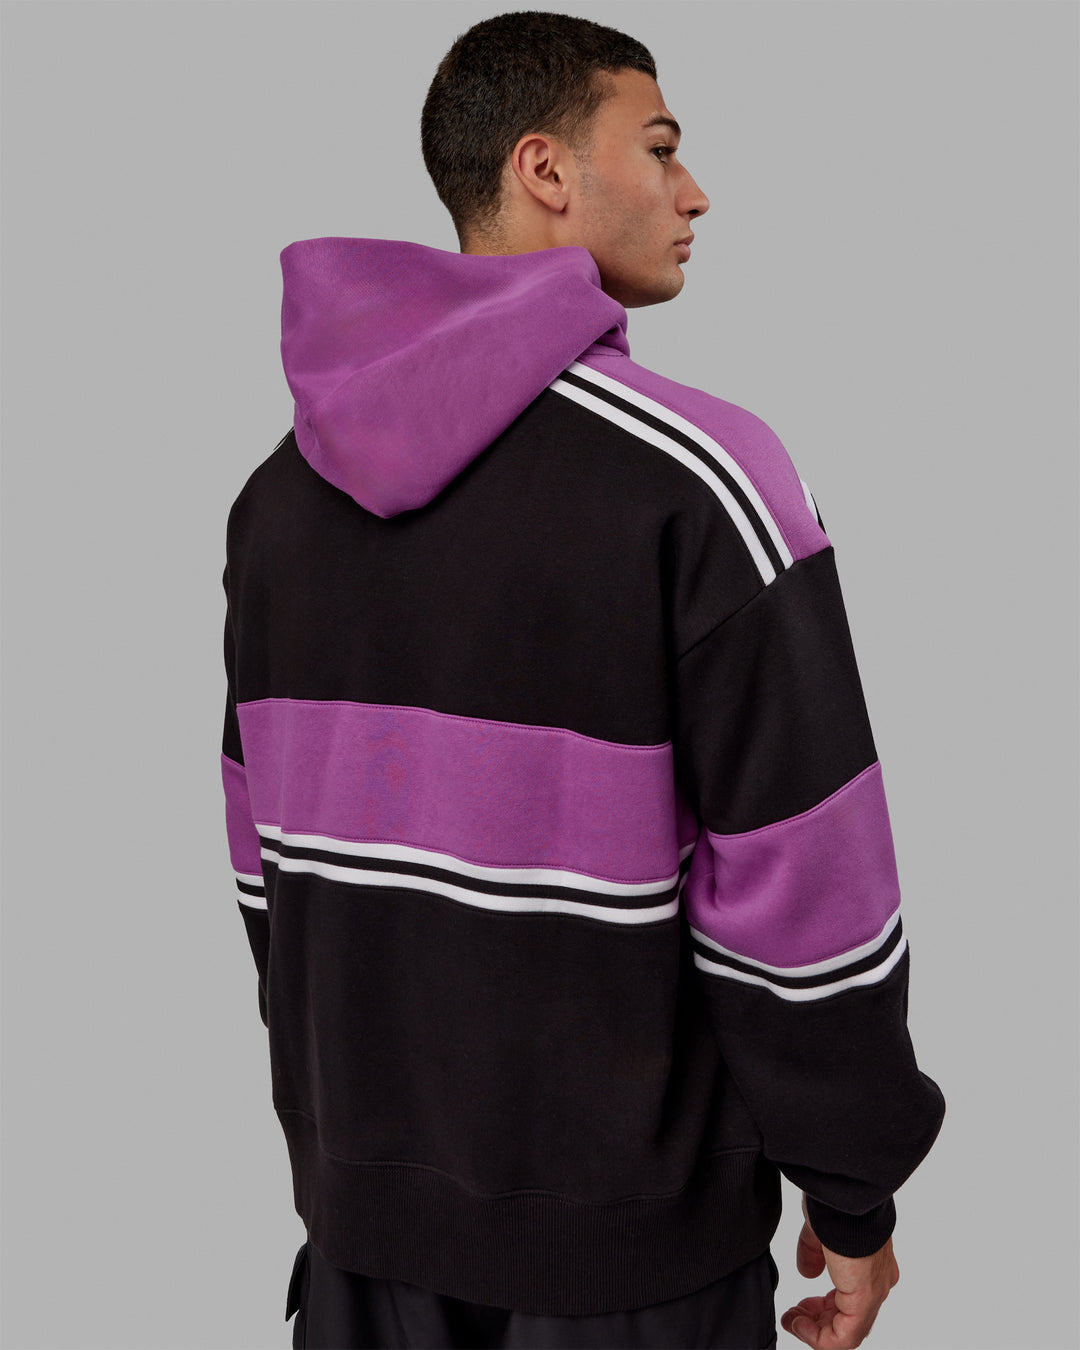 Man wearing Unisex A-Team Hoodie Oversize - Black-Hyper Violet